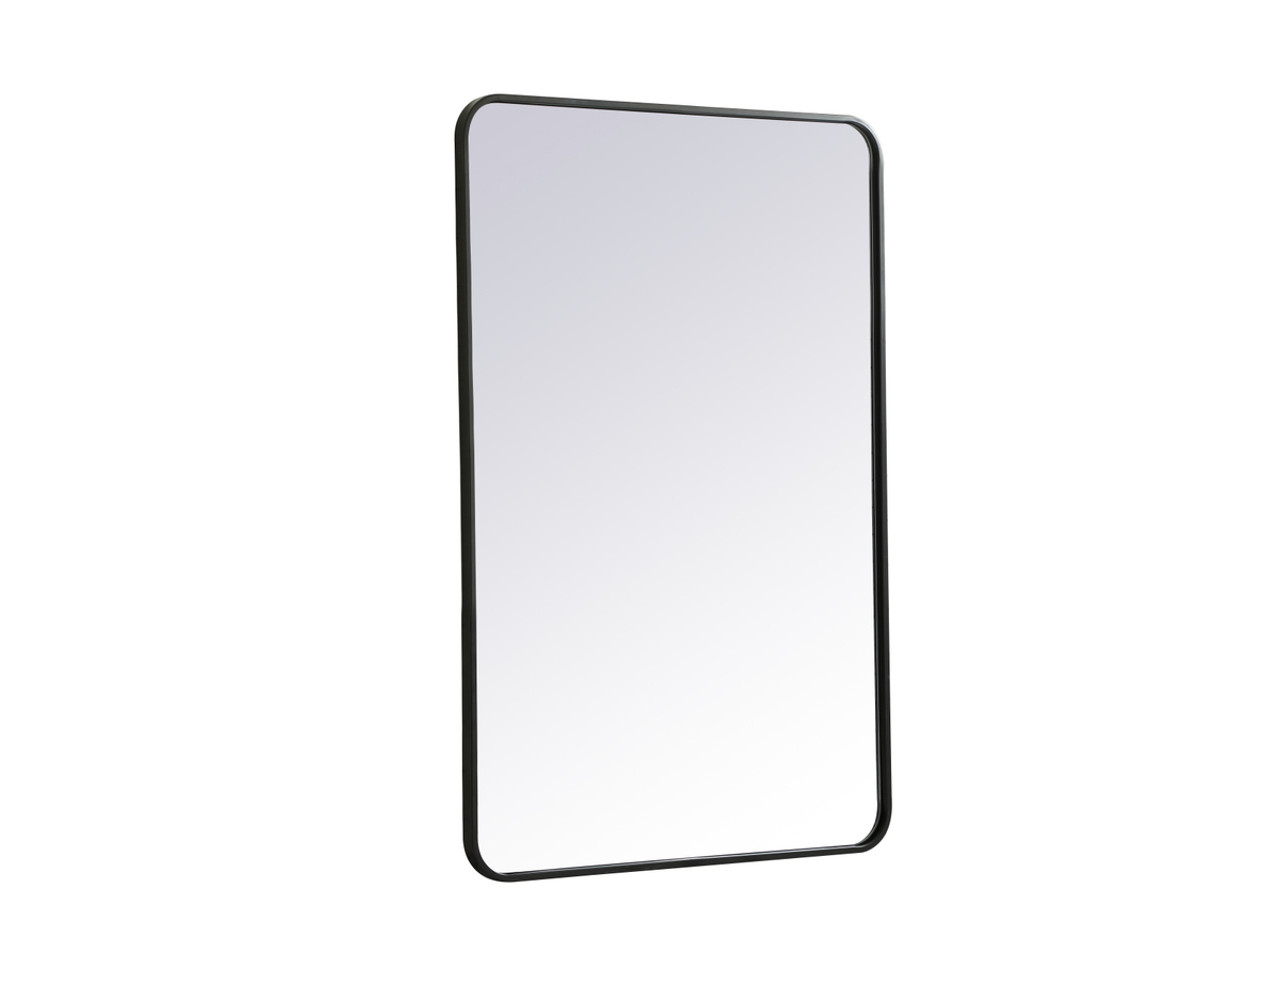 Elegant Decor MR802842BK Soft corner metal rectangular mirror 28x42 inch in Black